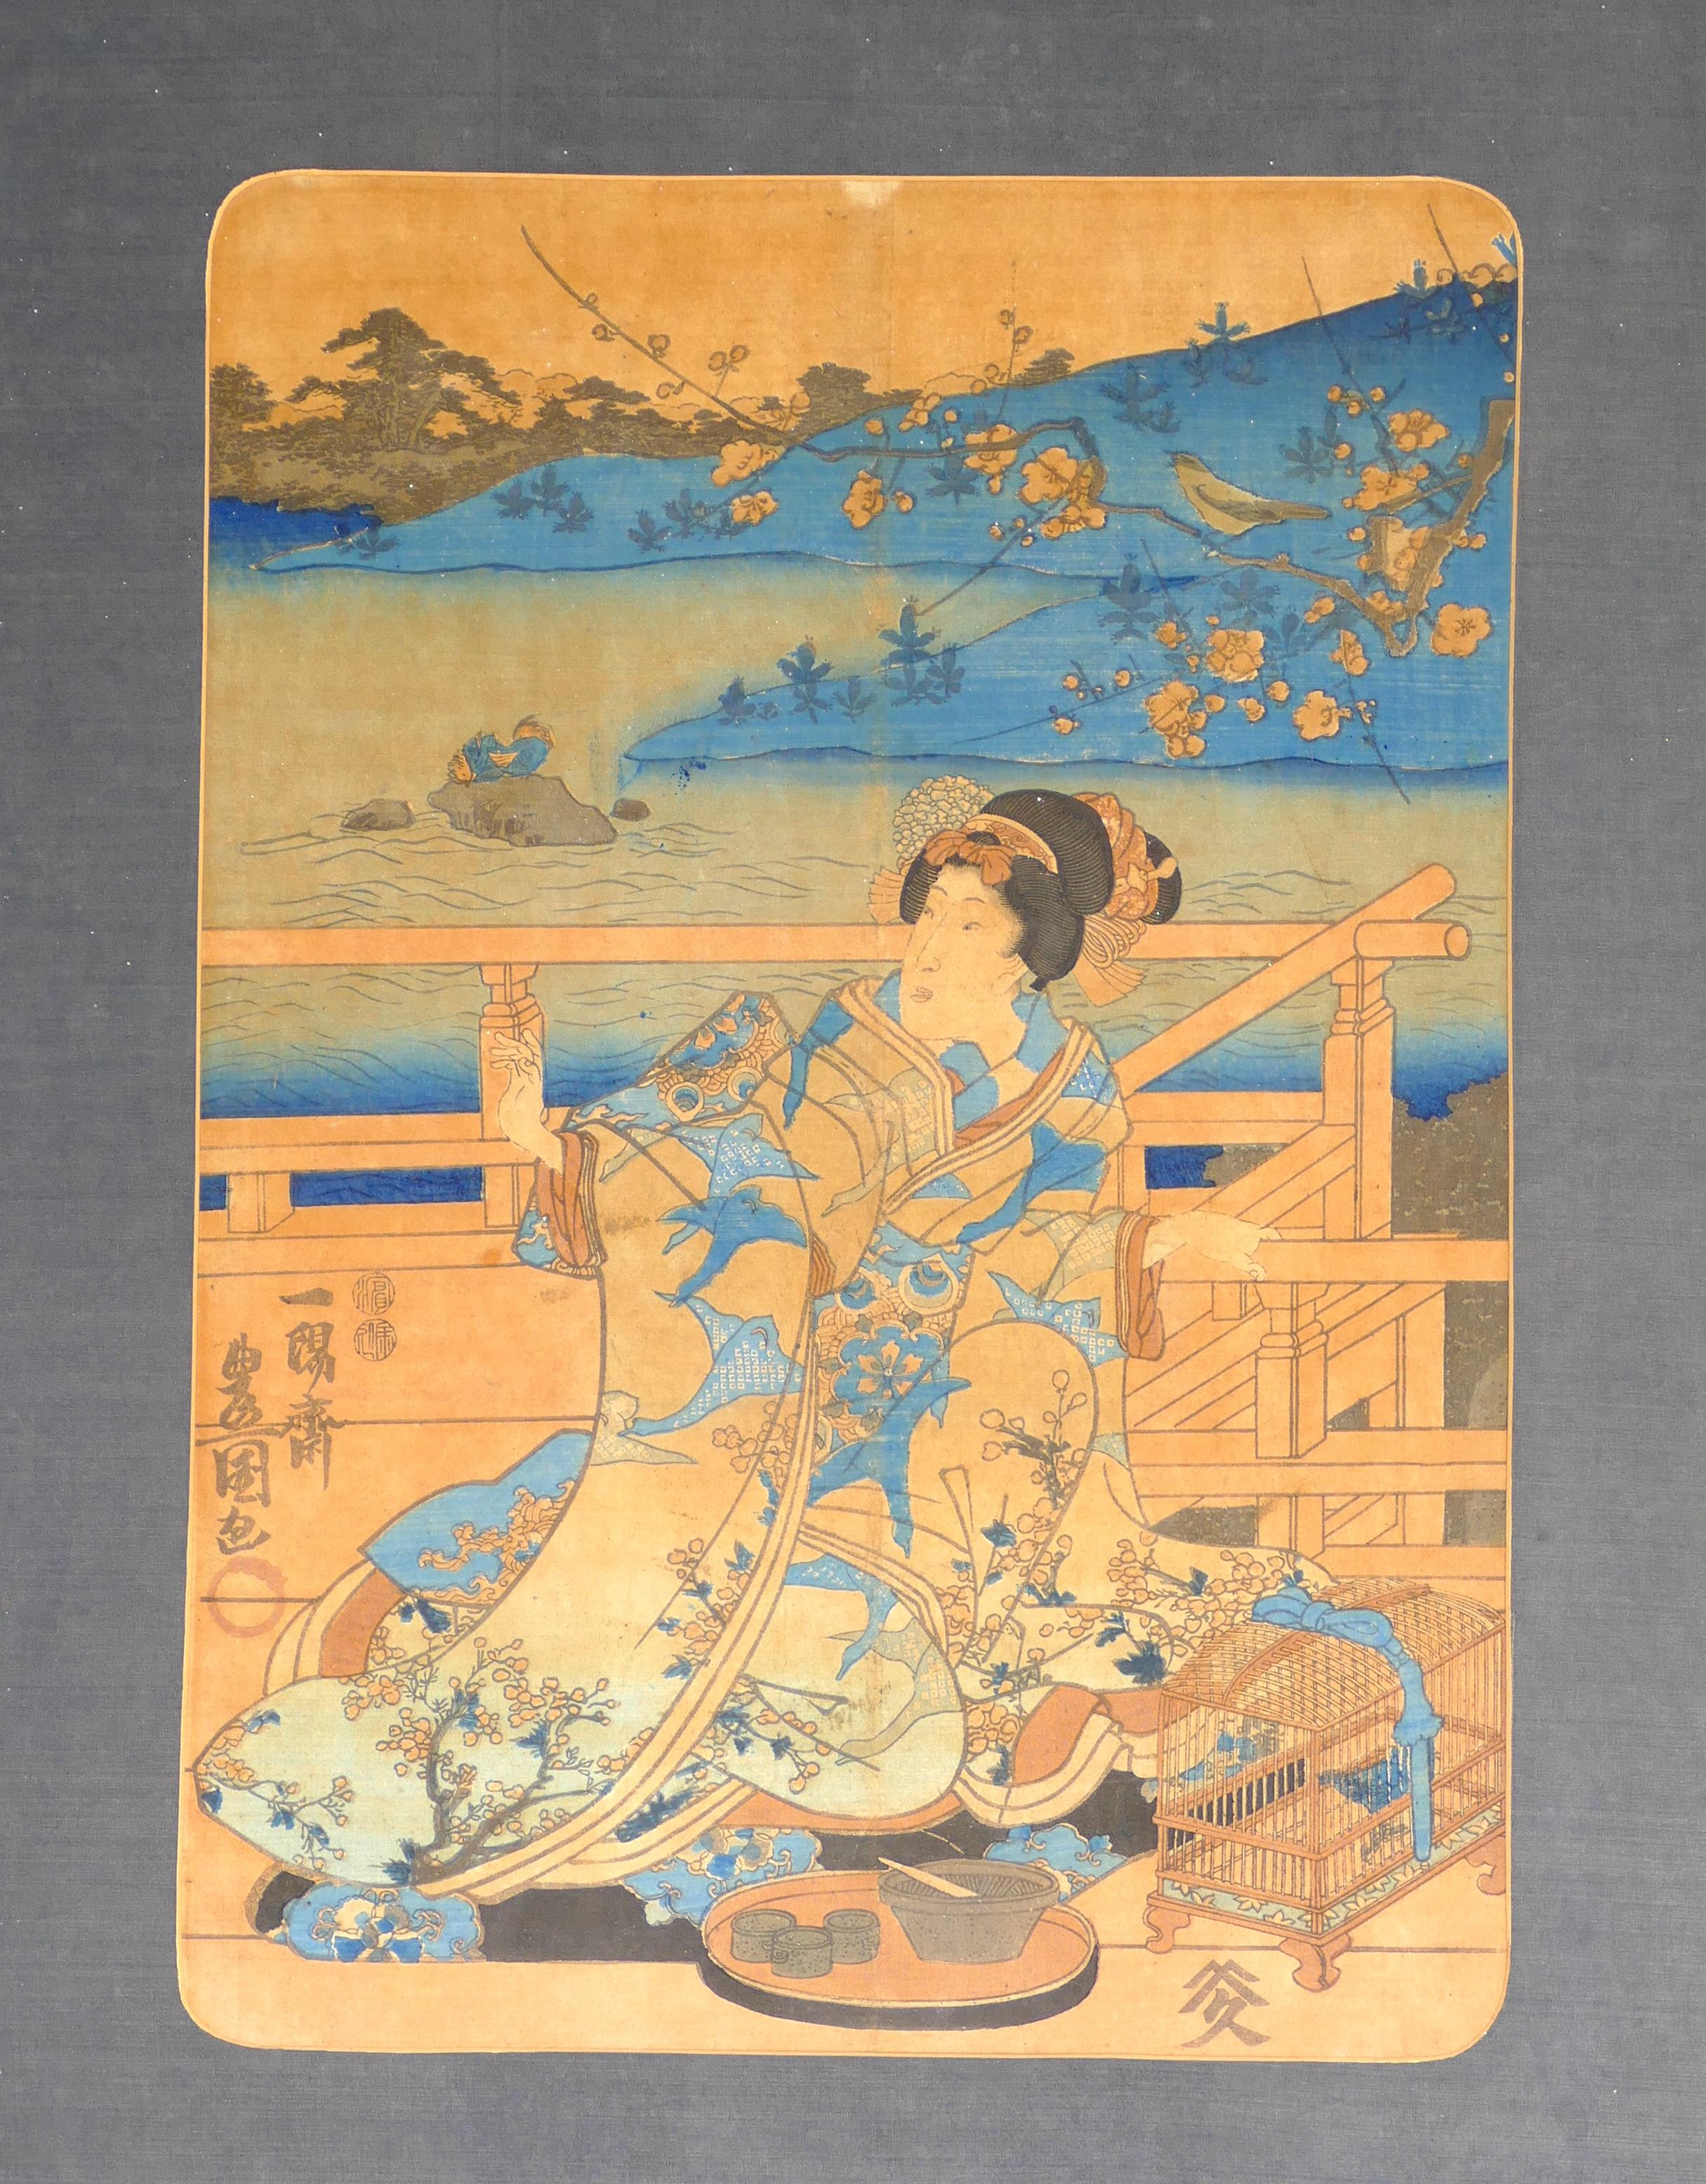 Woman - Woodcut by Utagawa Kunisada - 1830 ca.